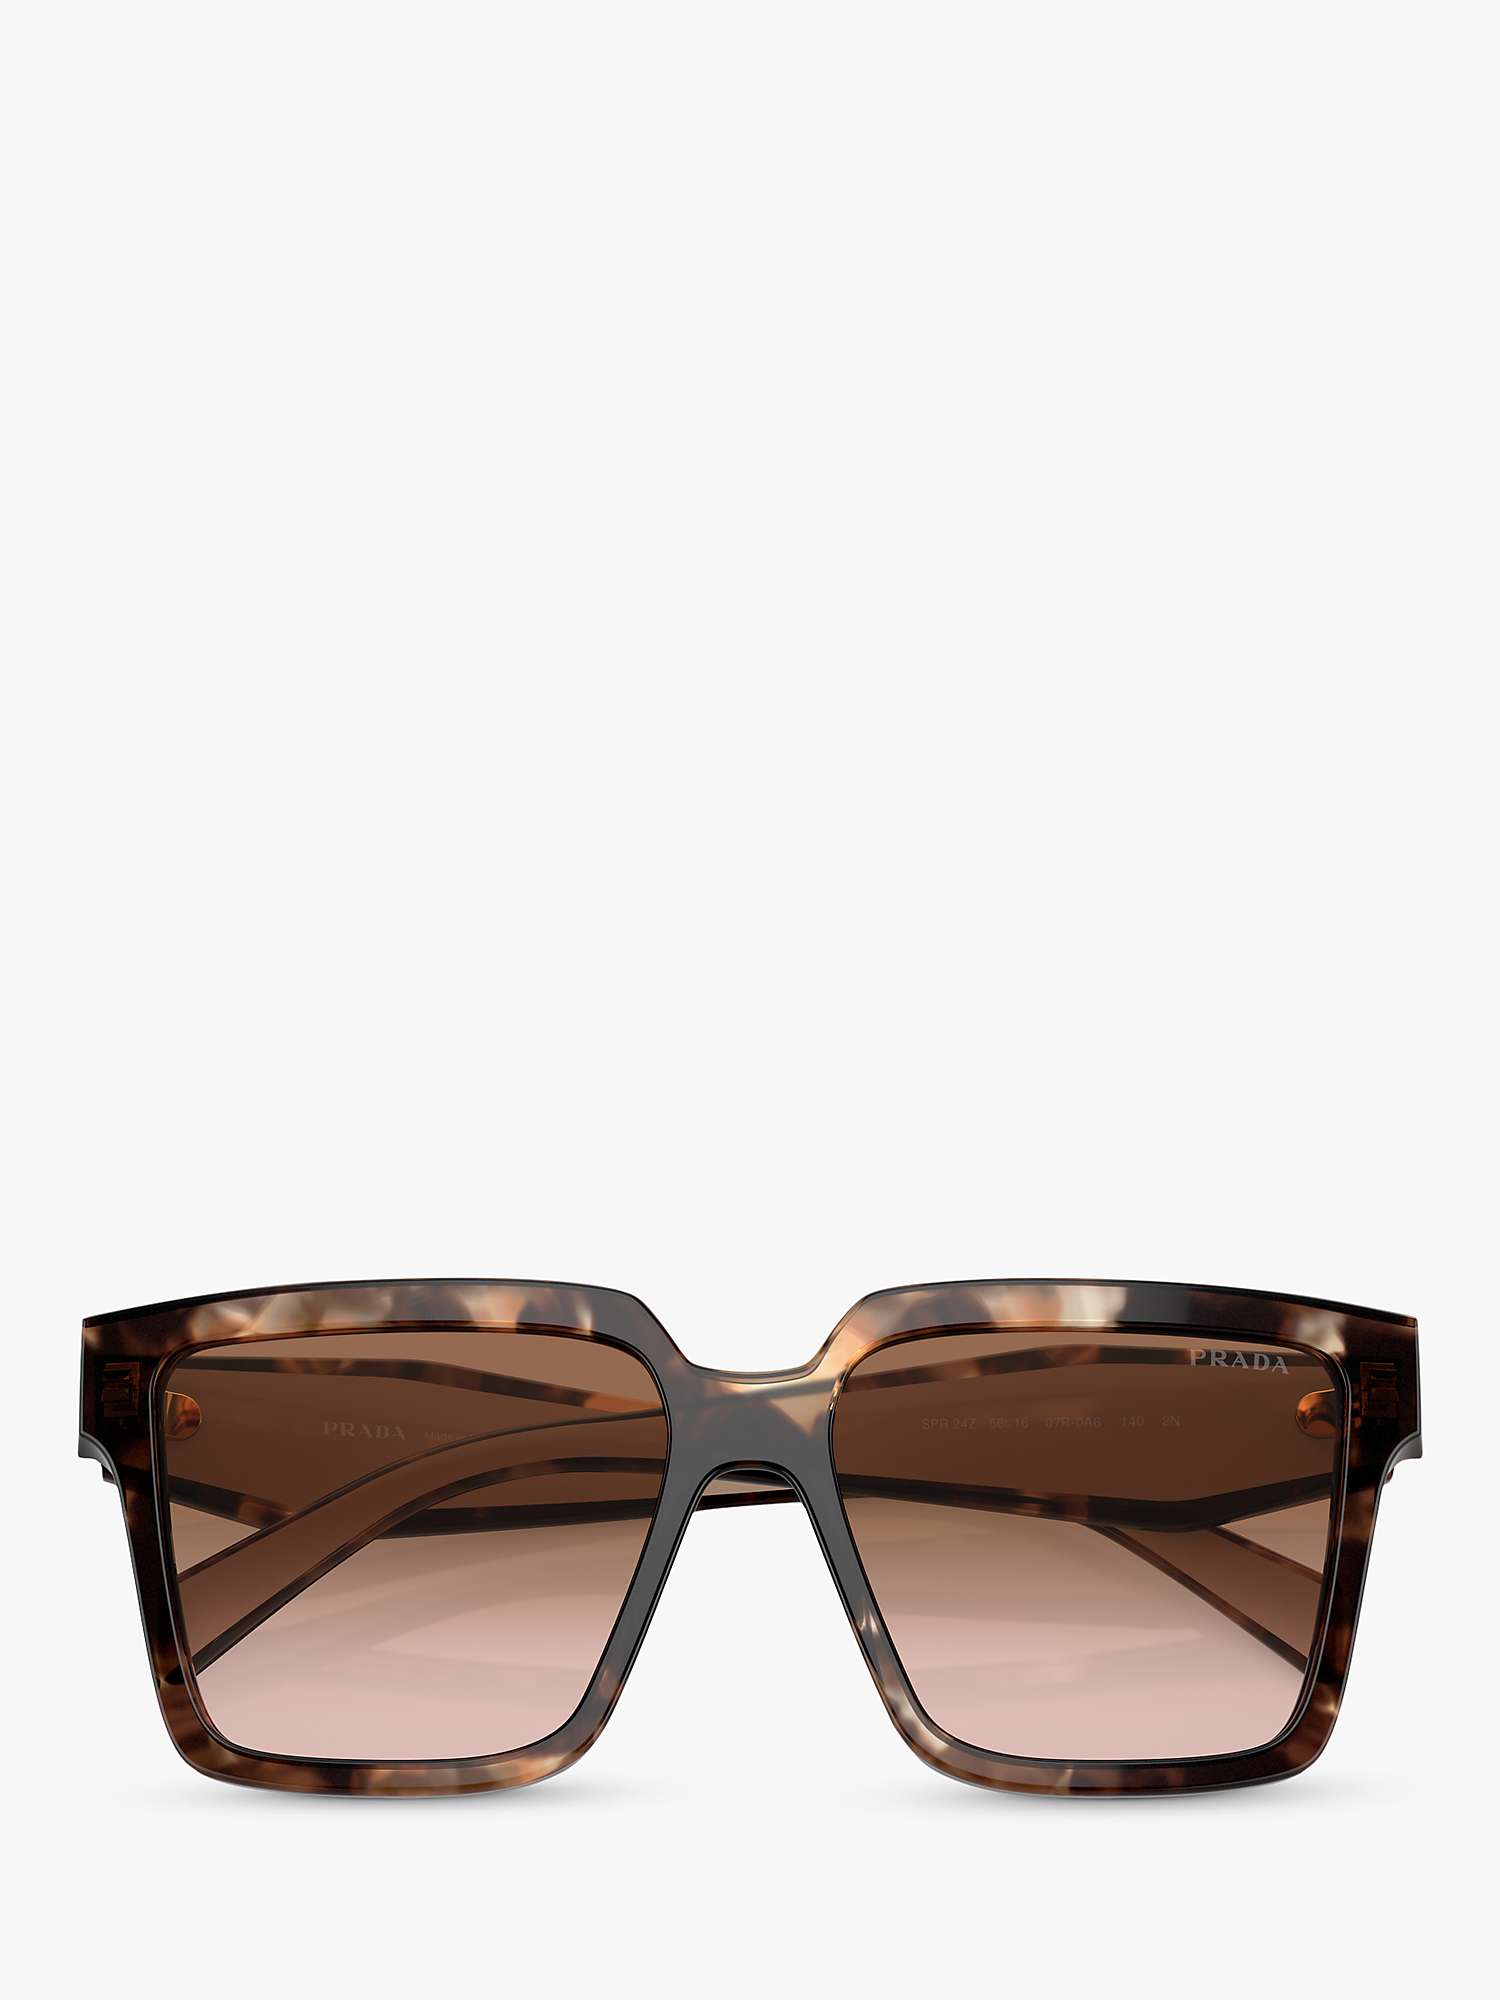 Buy Prada PR24ZS Women's Rectangular Sunglasses, Caramel Tortoise Online at johnlewis.com